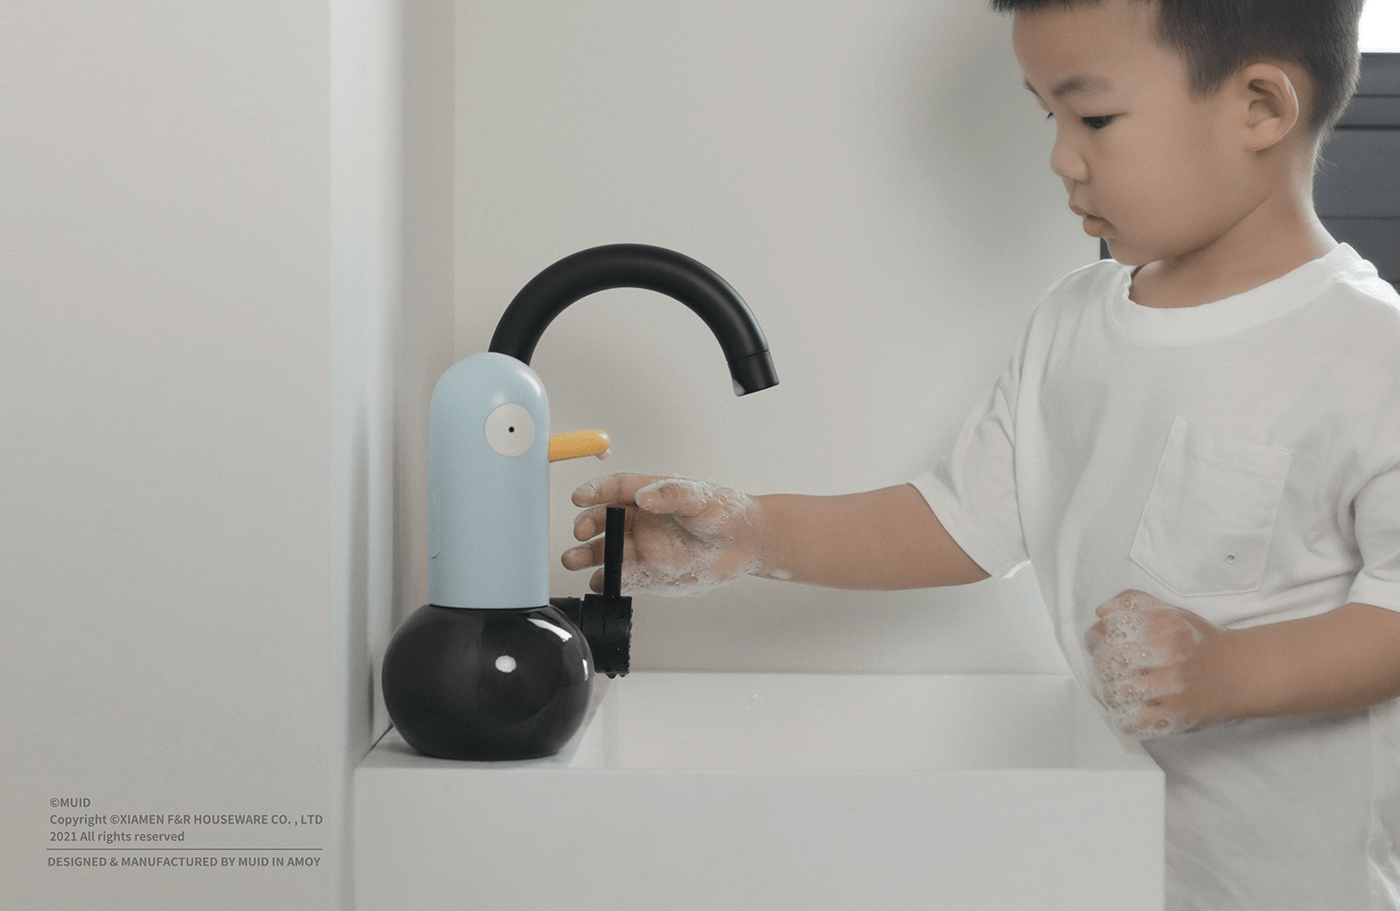 Muid product design  产品摄影 产品设计 工业设计 洗手泡泡机